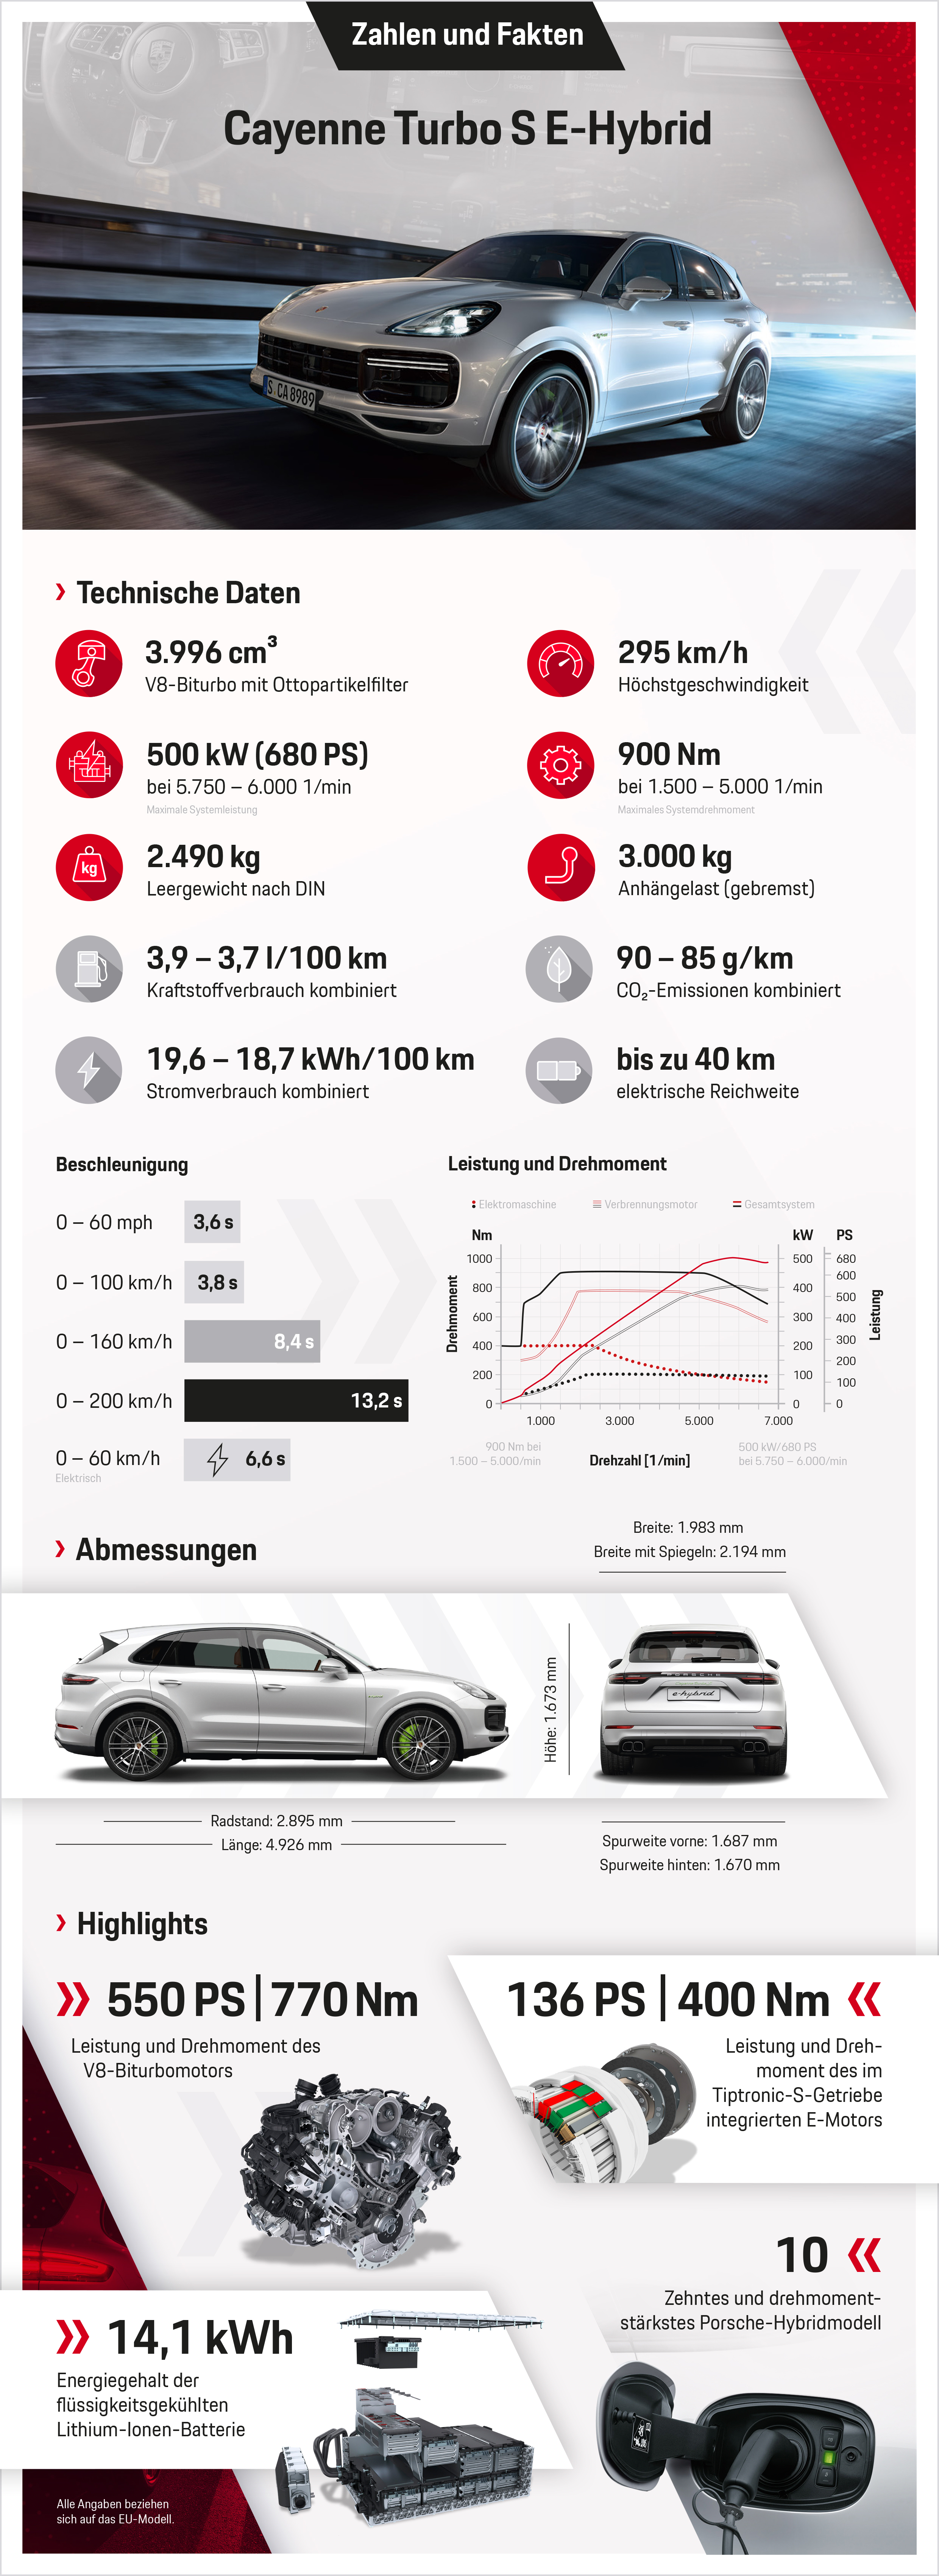 Cayenne Turbo S E-Hybrid, Infografik, 2019, Porsche AG